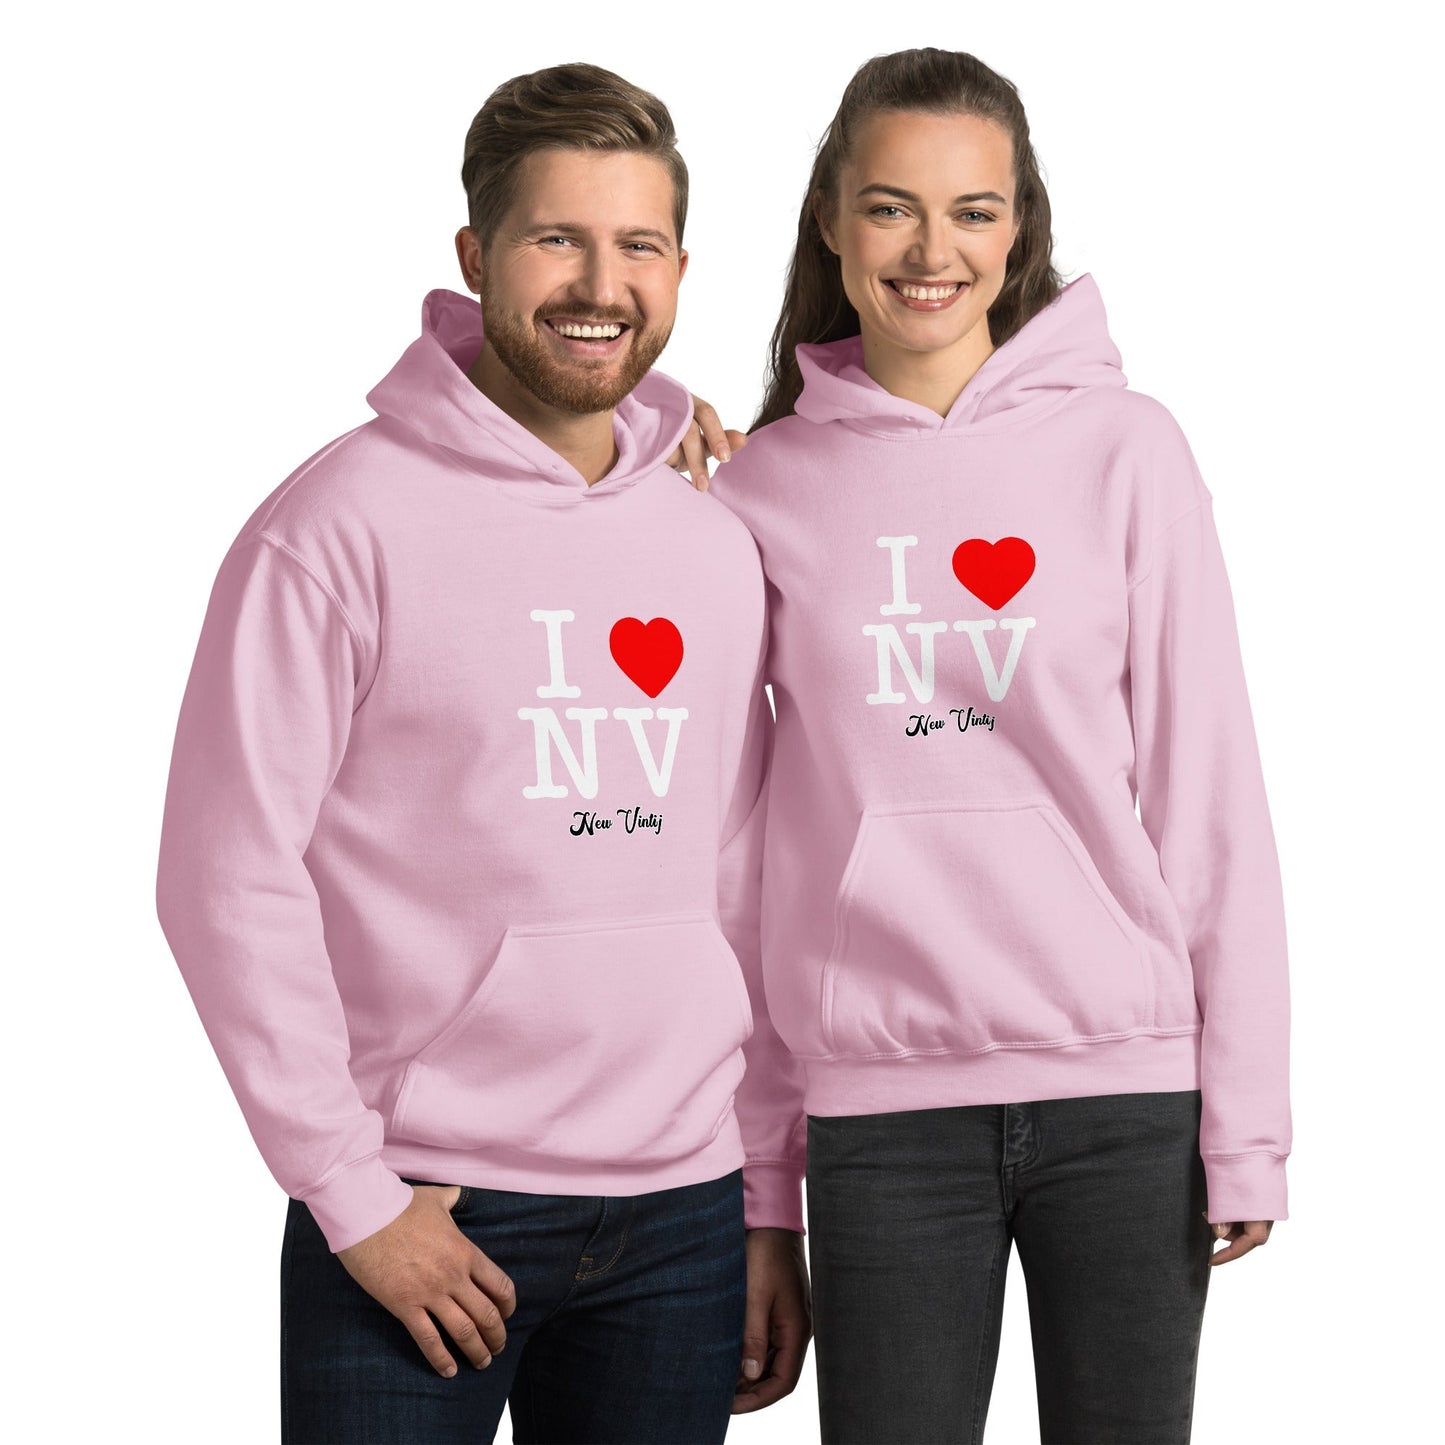 V-day hoodie- I Love NV